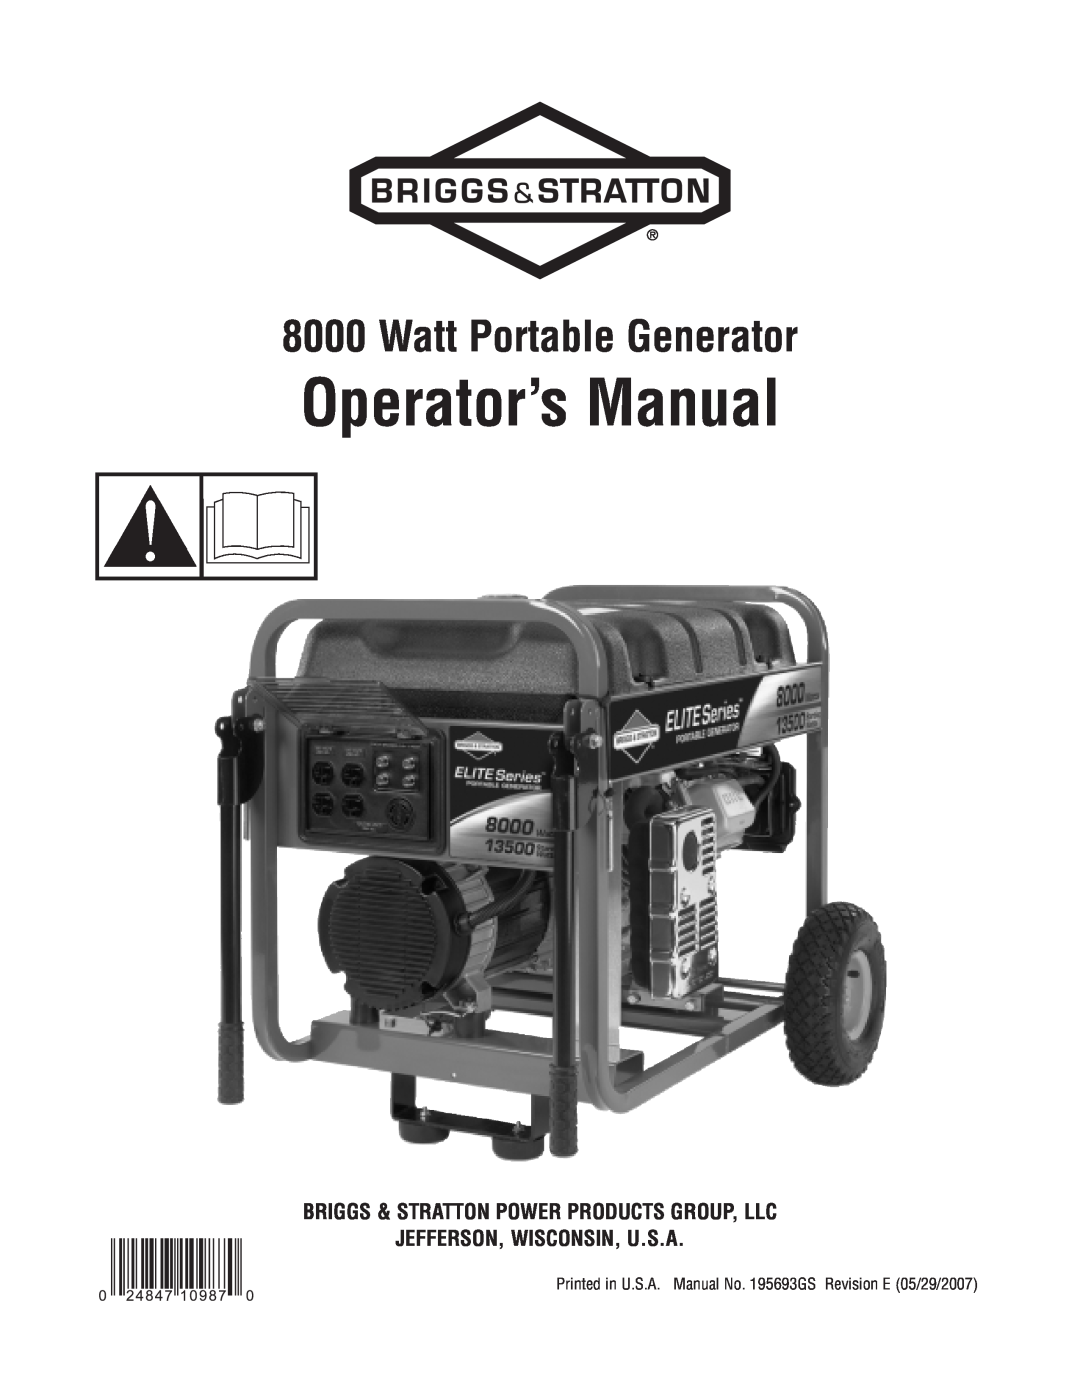 Briggs & Stratton 8000 Watt Portable Generator manual Operator’s Manual, Briggs & Stratton Power Products Group, Llc 